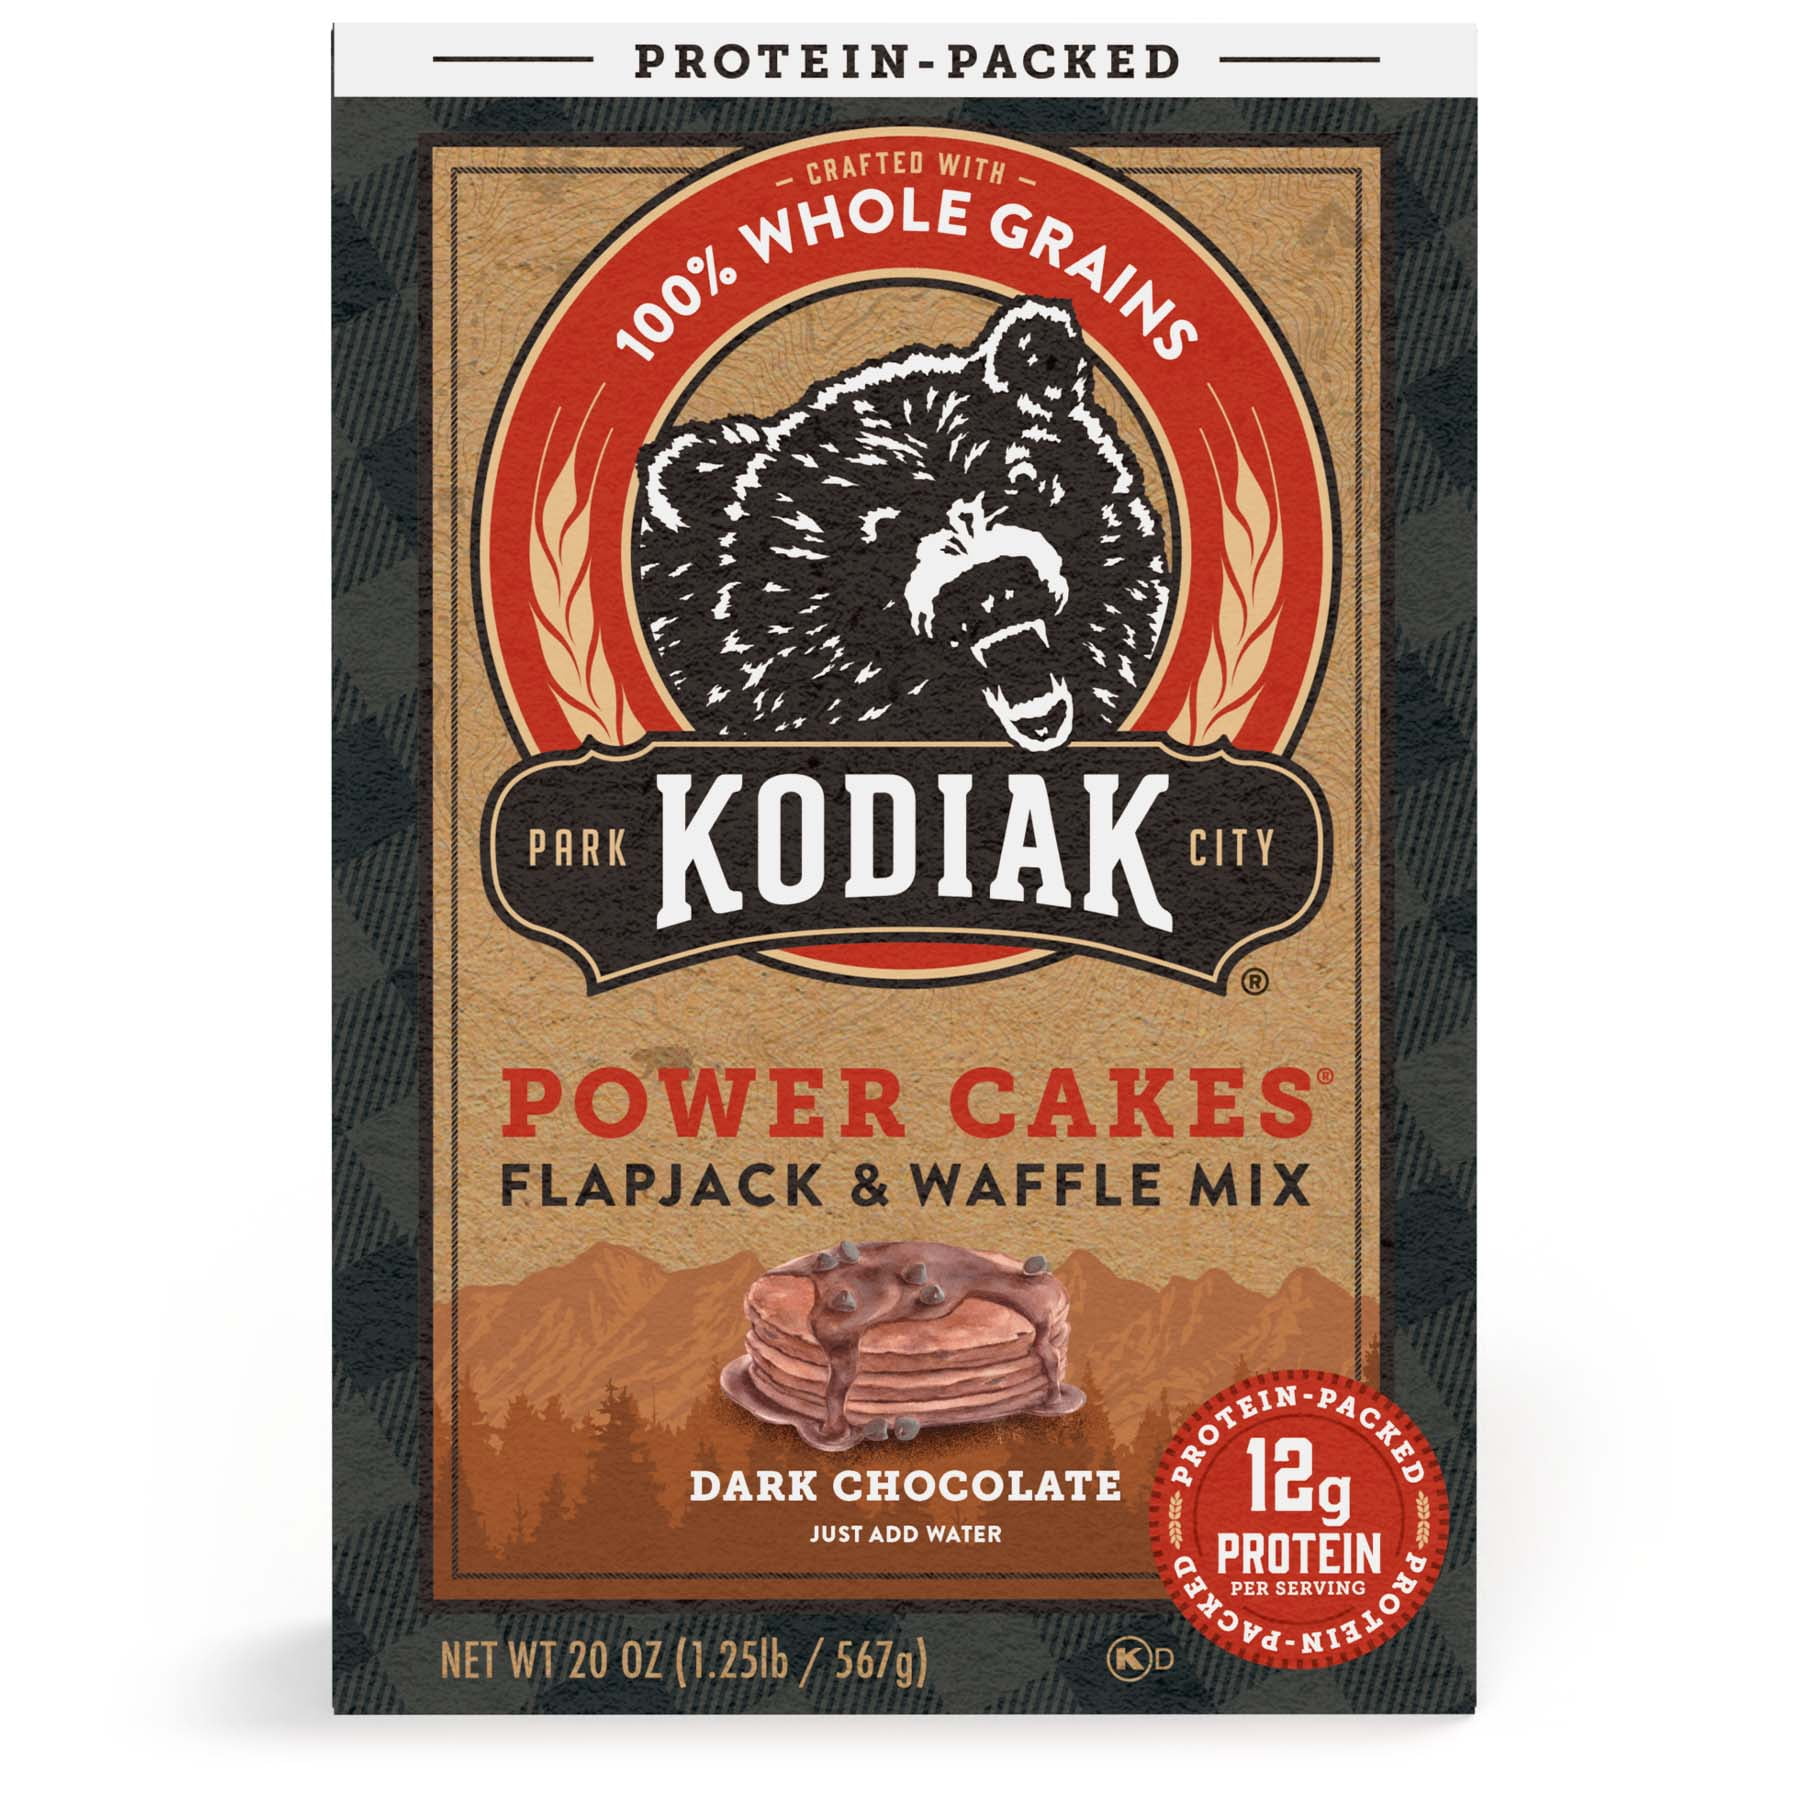 Kodiak Protein-Packed Power Cakes Dark Chocolate Flapjack and Waffle Mix, 18 oz